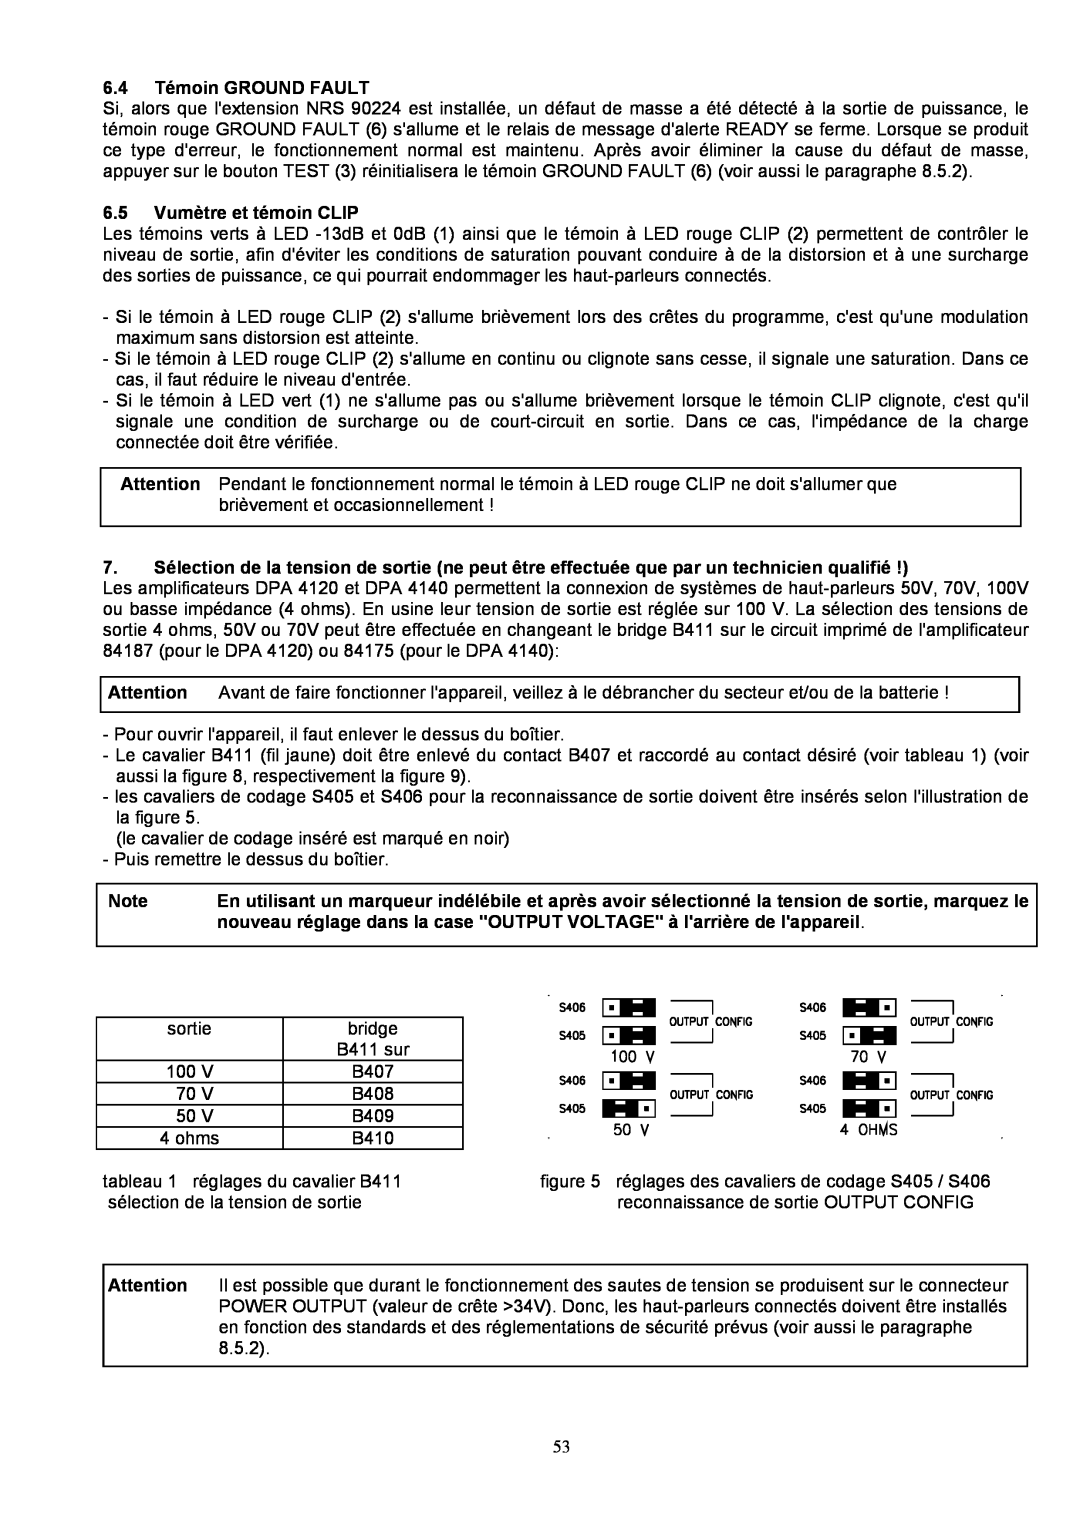 Dynacord DPA 4120, DPA 4140 owner manual 6.4Témoin GROUND FAULT, 6.5Vumètre et témoin CLIP 